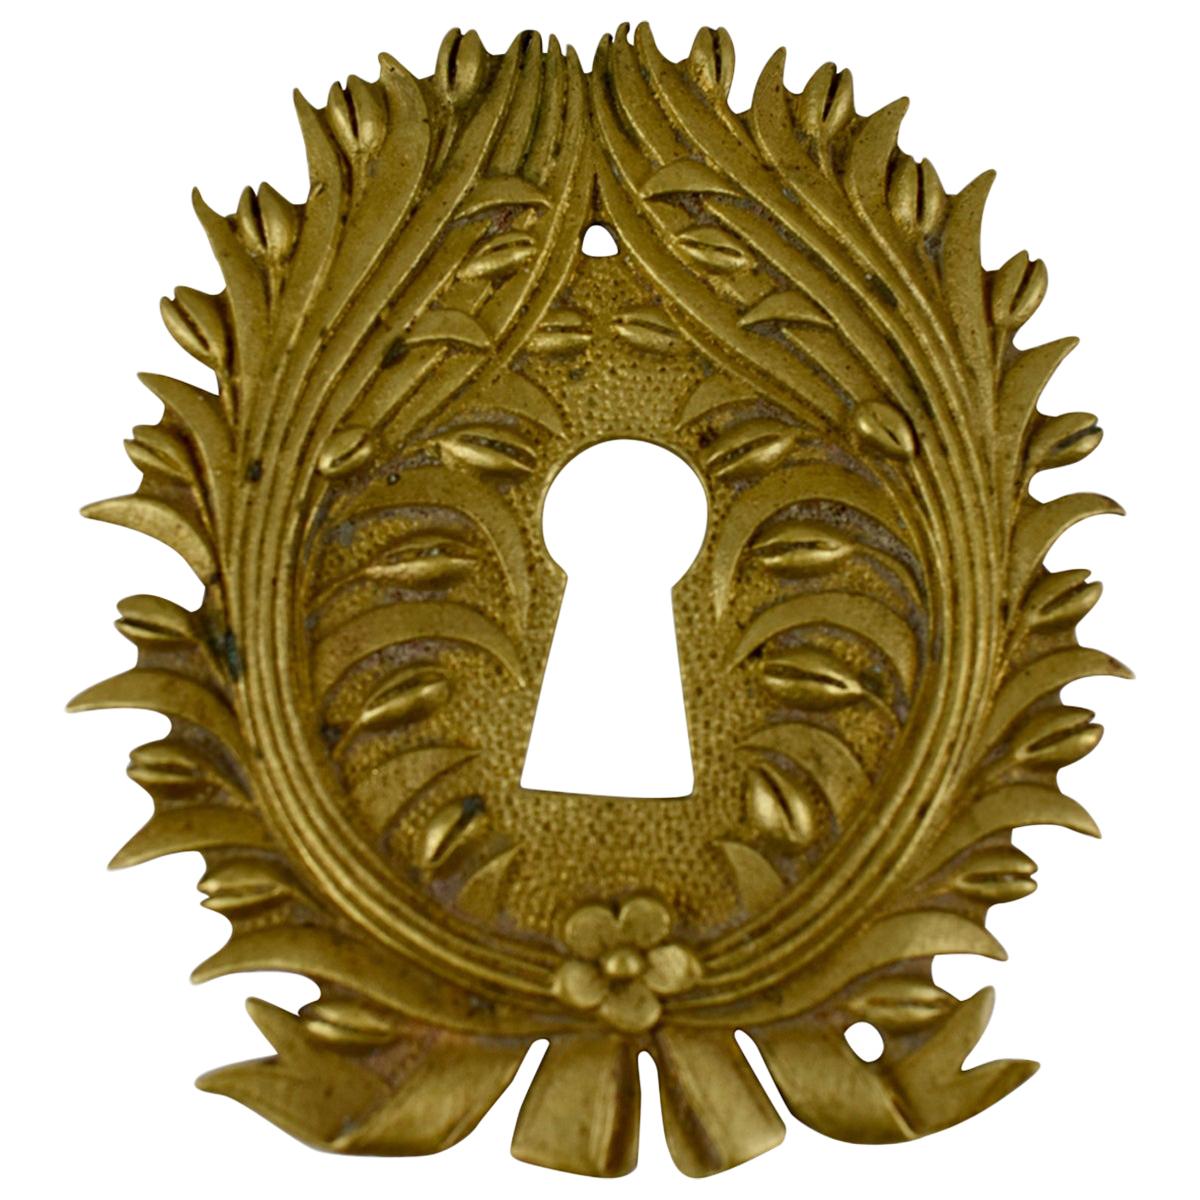 French Beaux Arts Decor Ormolu Wreath and Floral Escutcheon Keyhole Cover